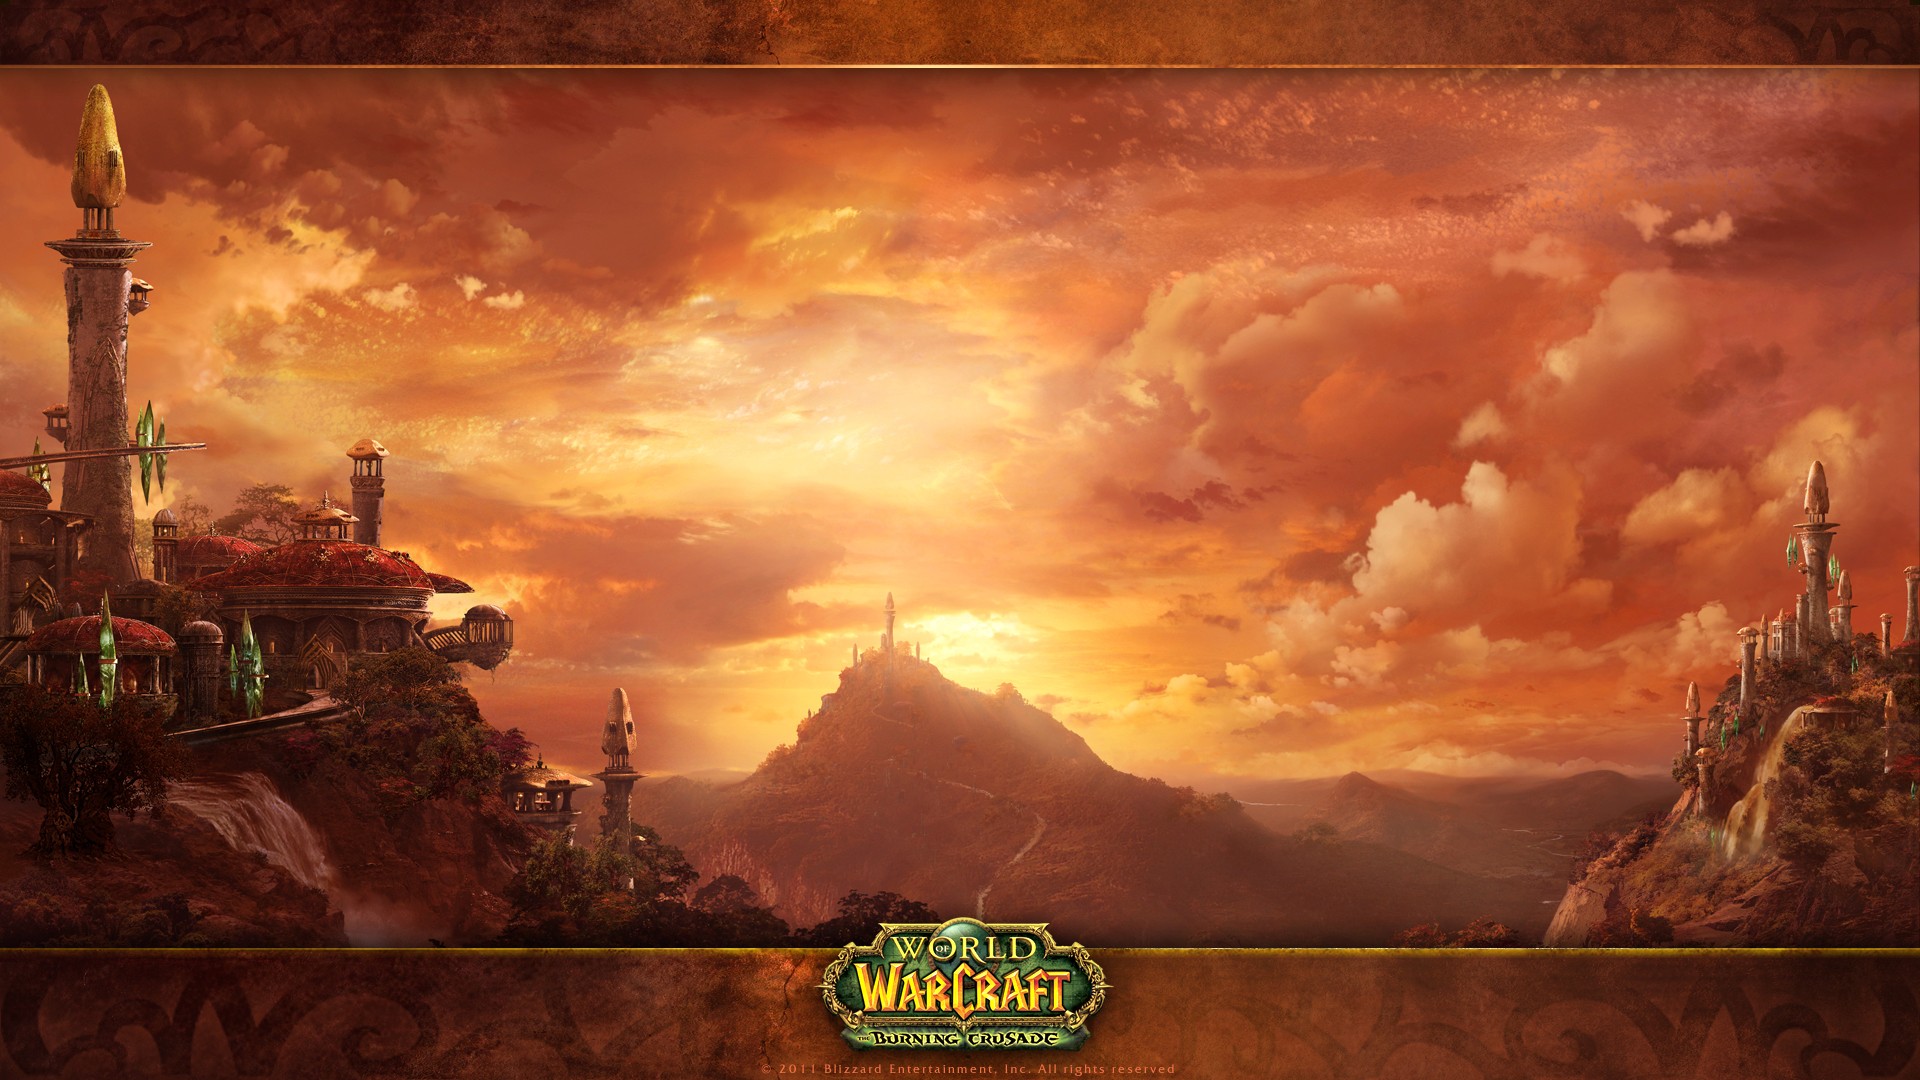 General 1920x1080 Blizzard Entertainment Warcraft World of Warcraft Silvermoon City World of Warcraft: The Burning Crusade video games 2011 (Year) PC gaming